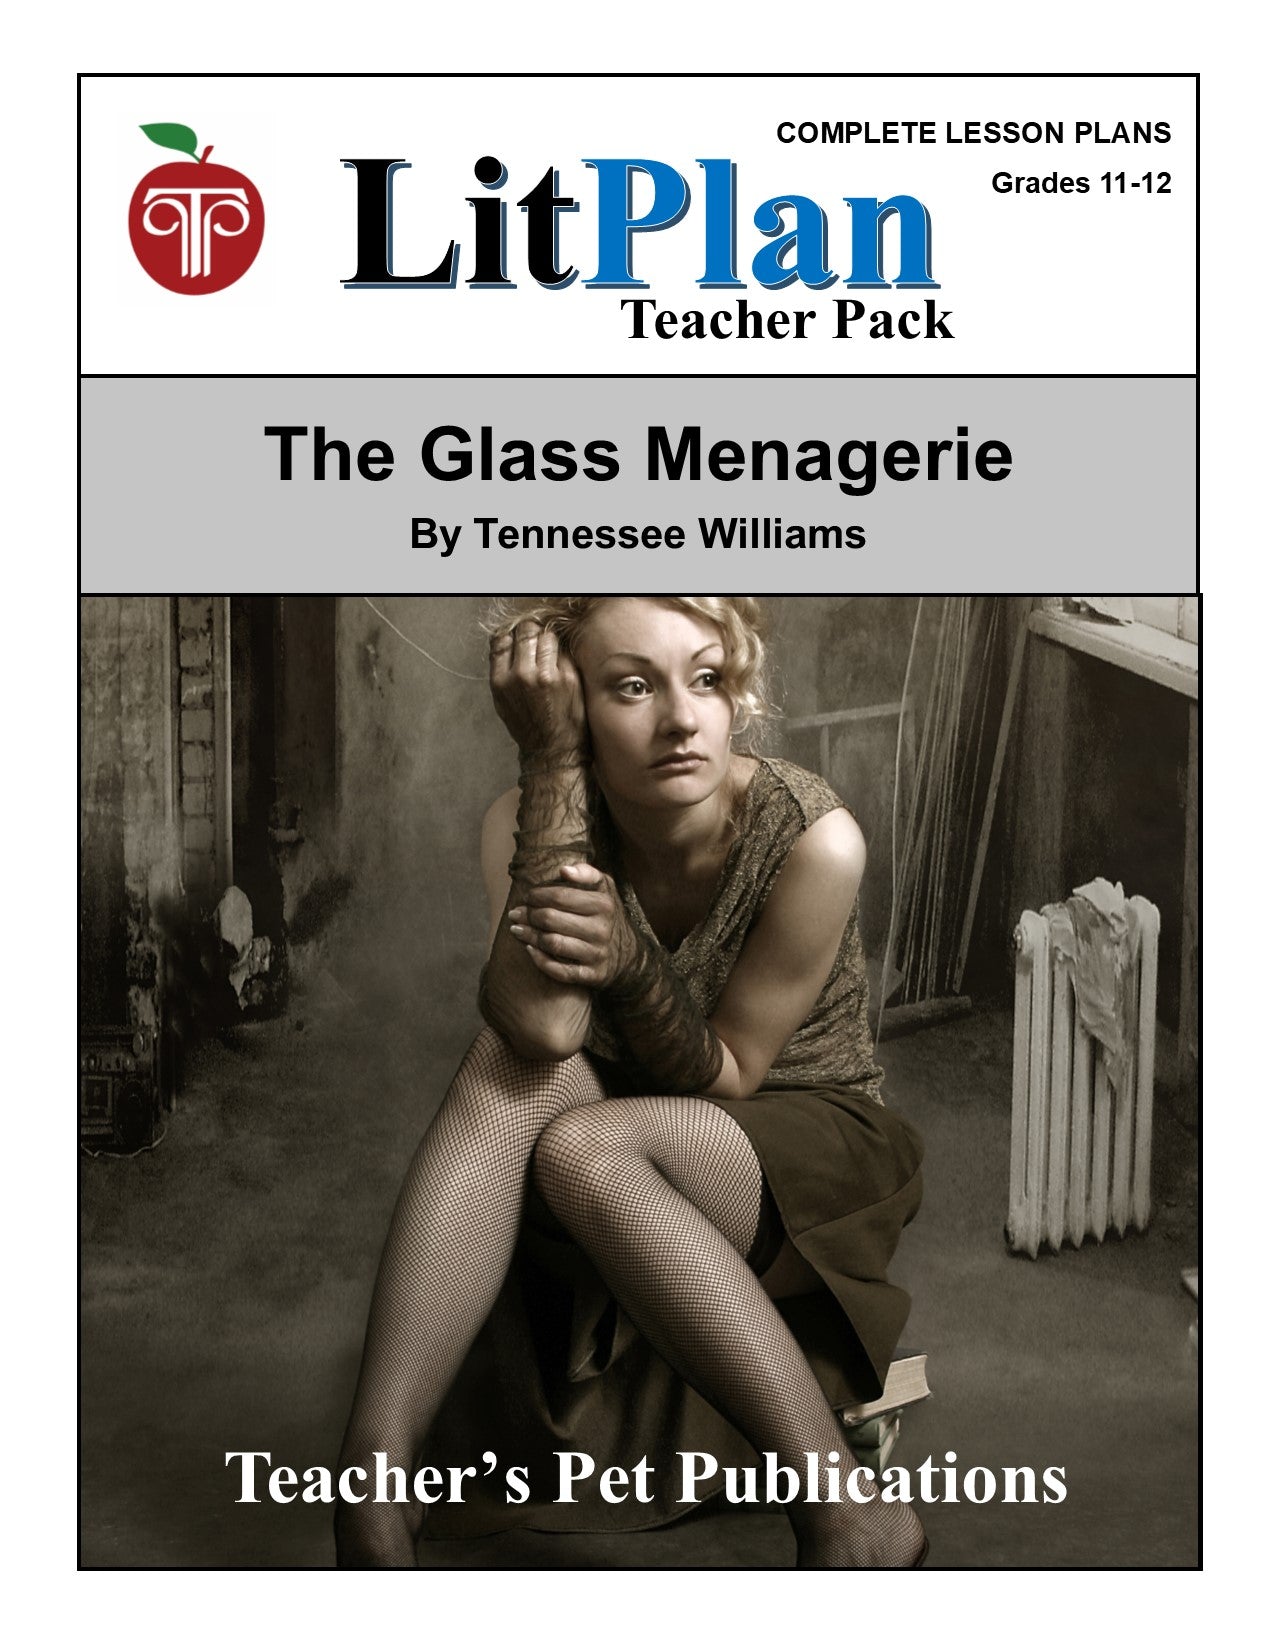 The Glass Menagerie:  LitPlan Teacher Pack Grades 11-12